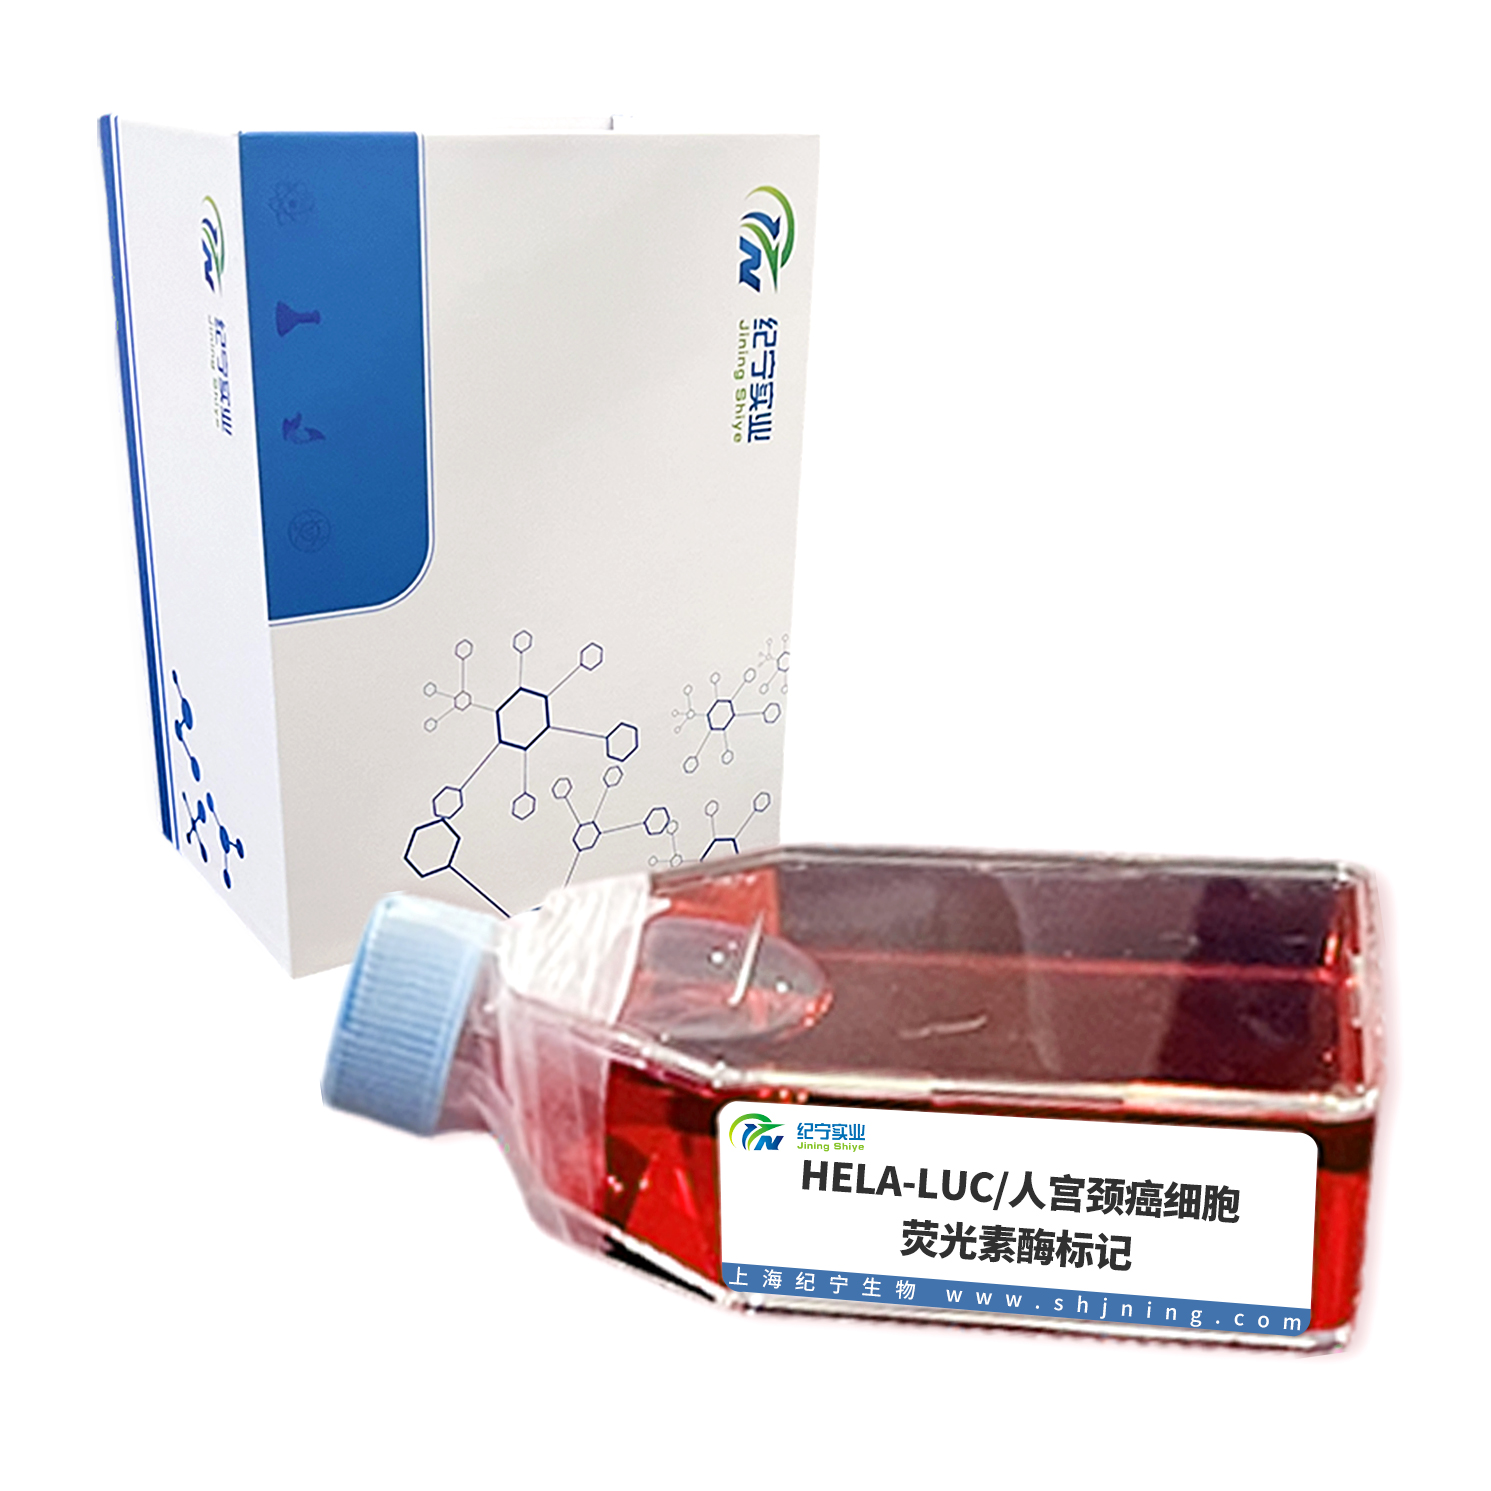 HELA-LUC/人宫颈癌细胞-荧光素酶标记